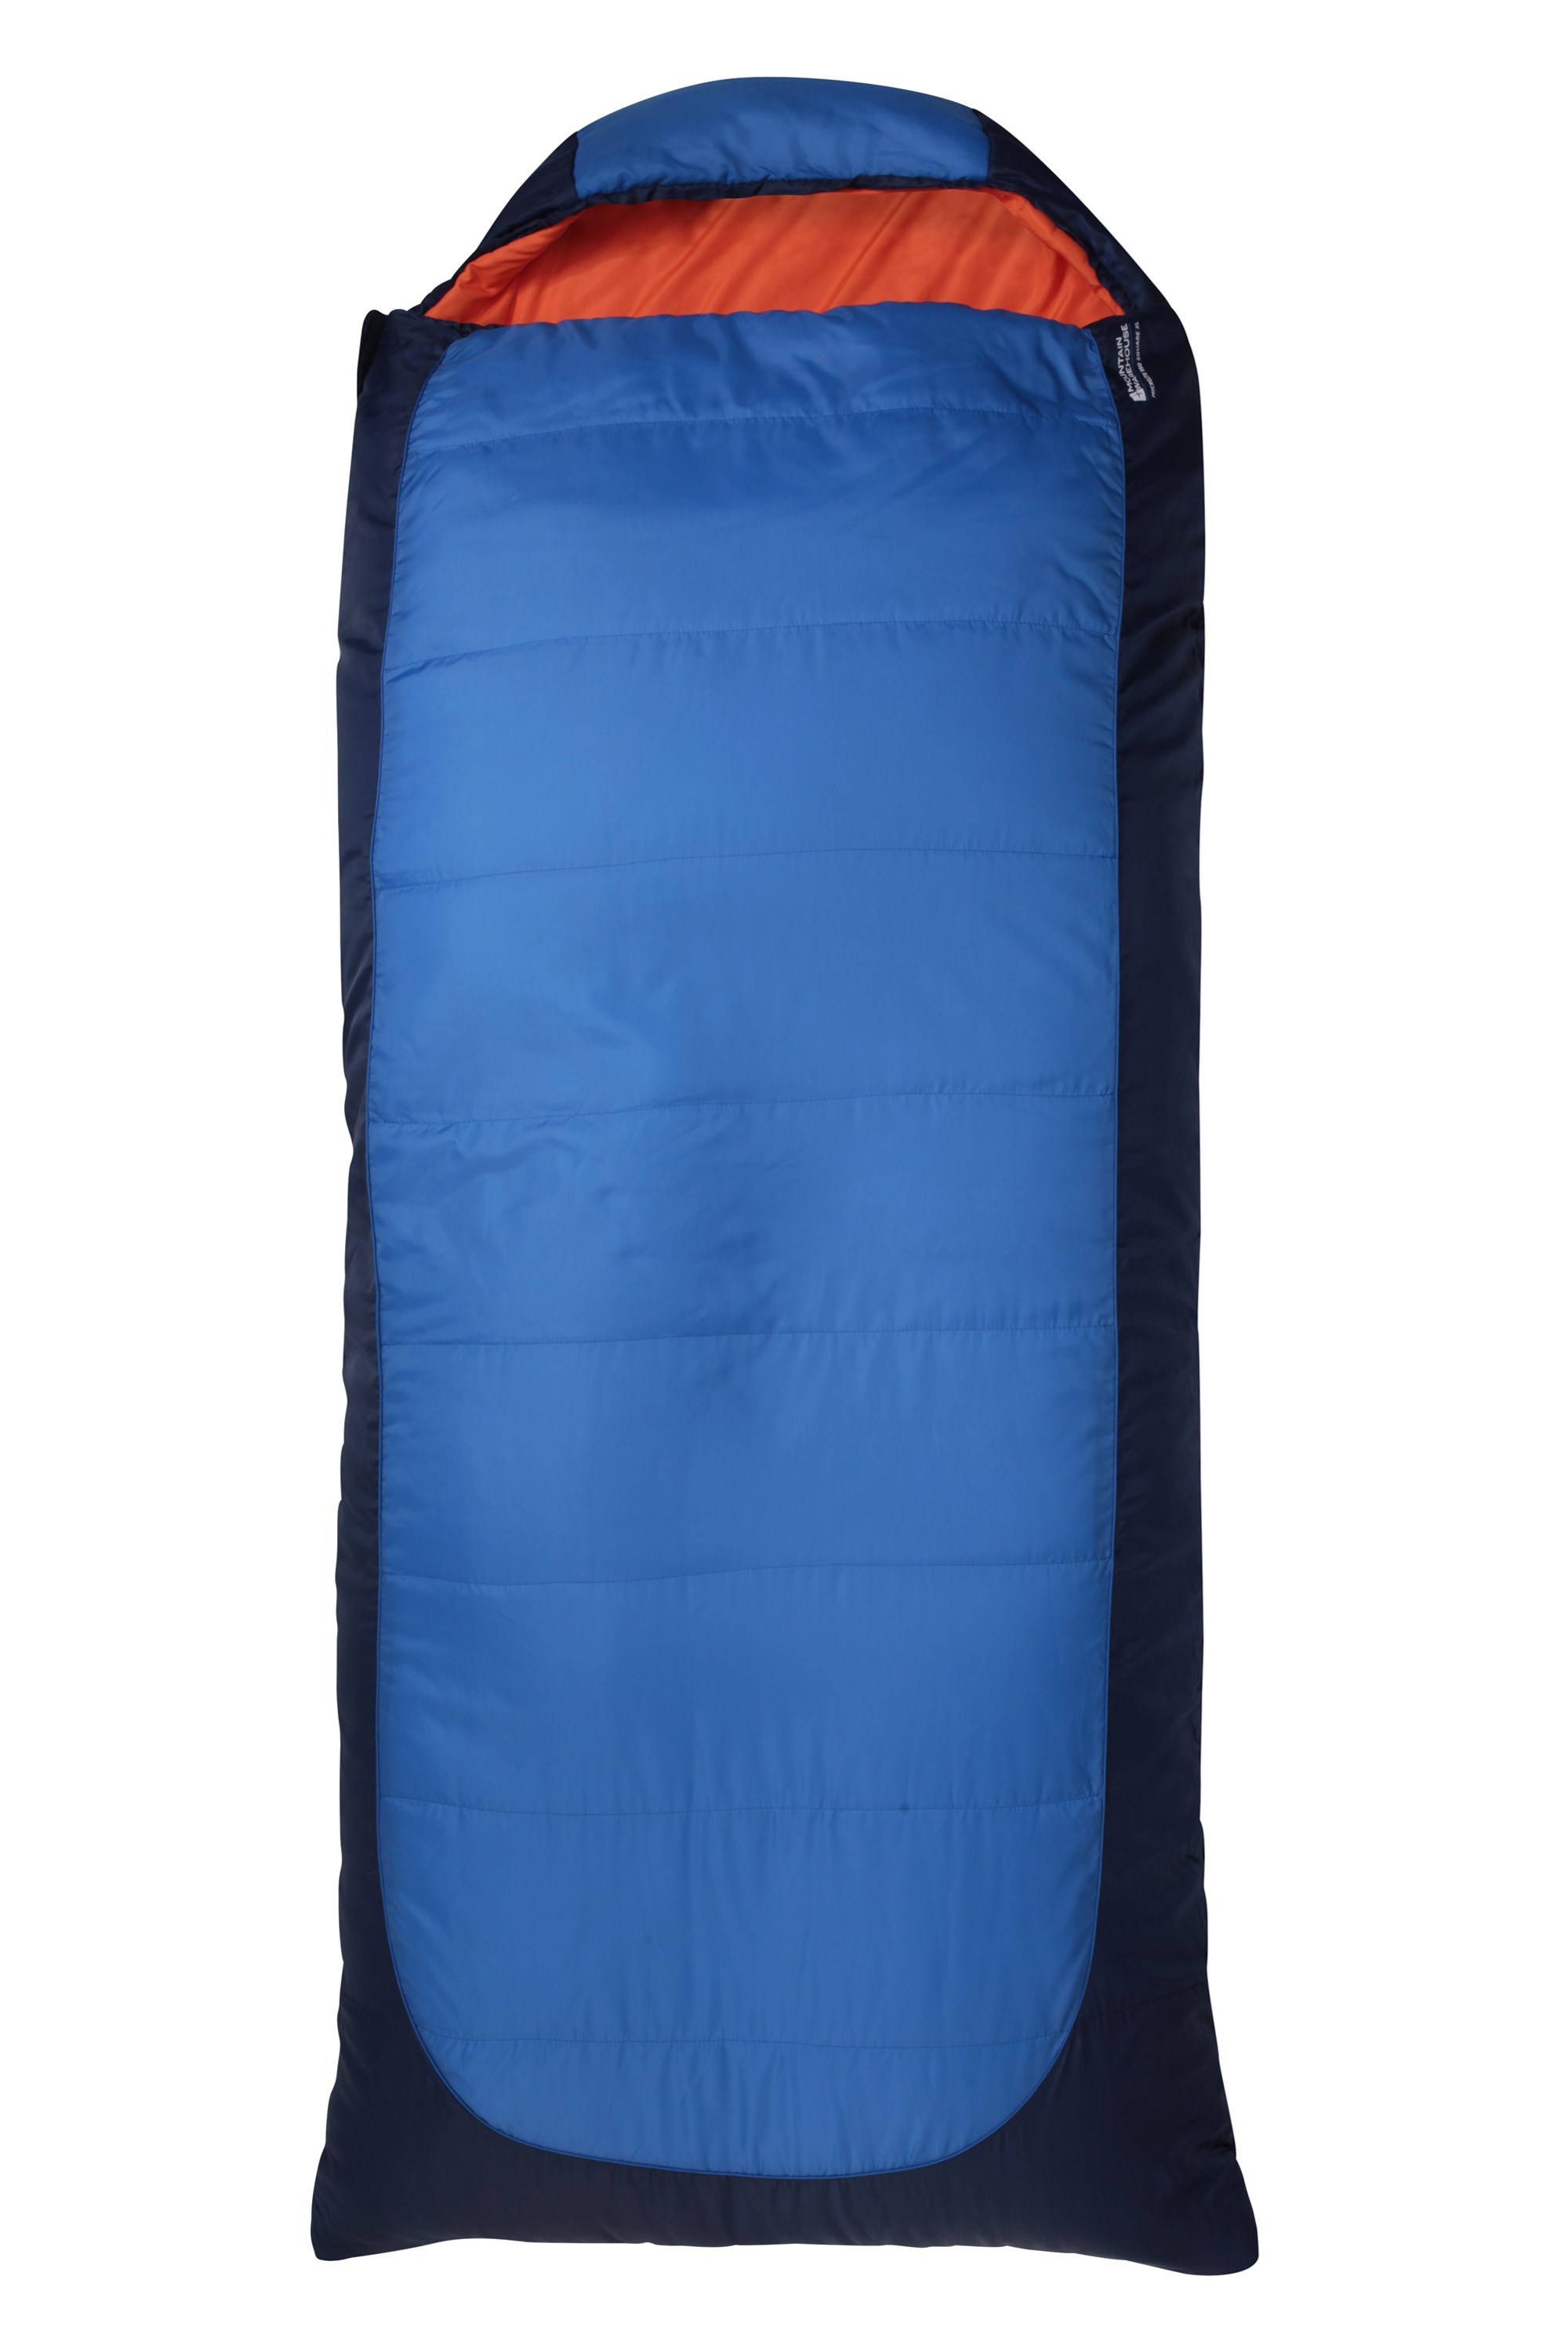 Microlite 950 Square XL Winter Sleeping Bag - Blue